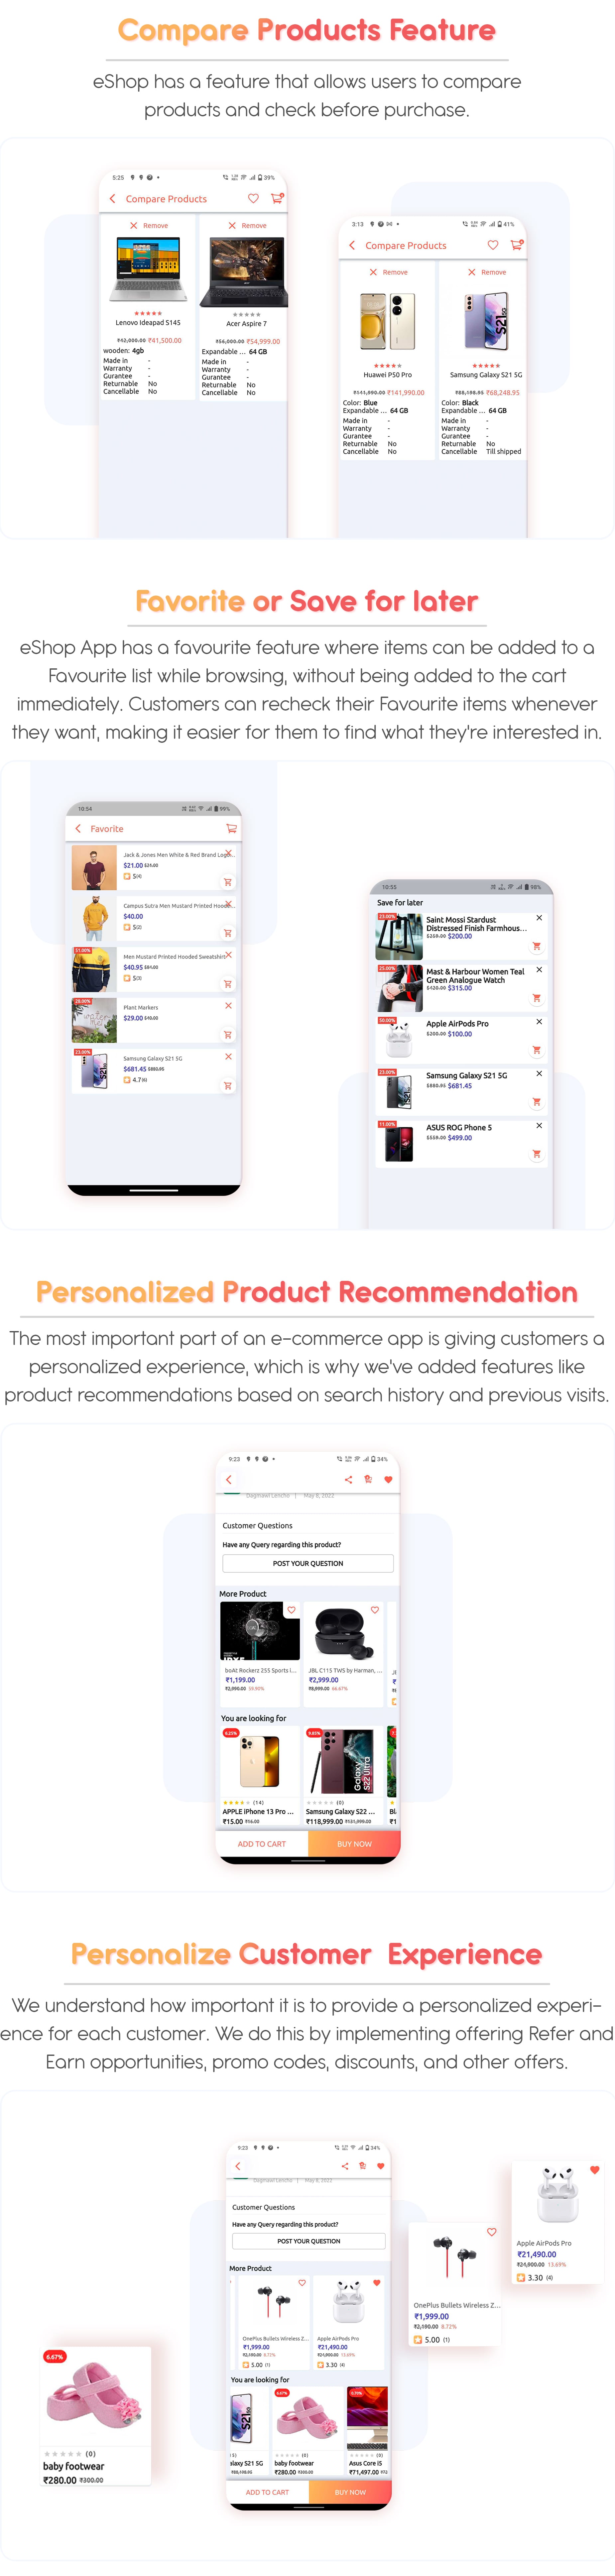 eShop - Multi Vendor eCommerce App & eCommerce Vendor Marketplace Flutter App - 27